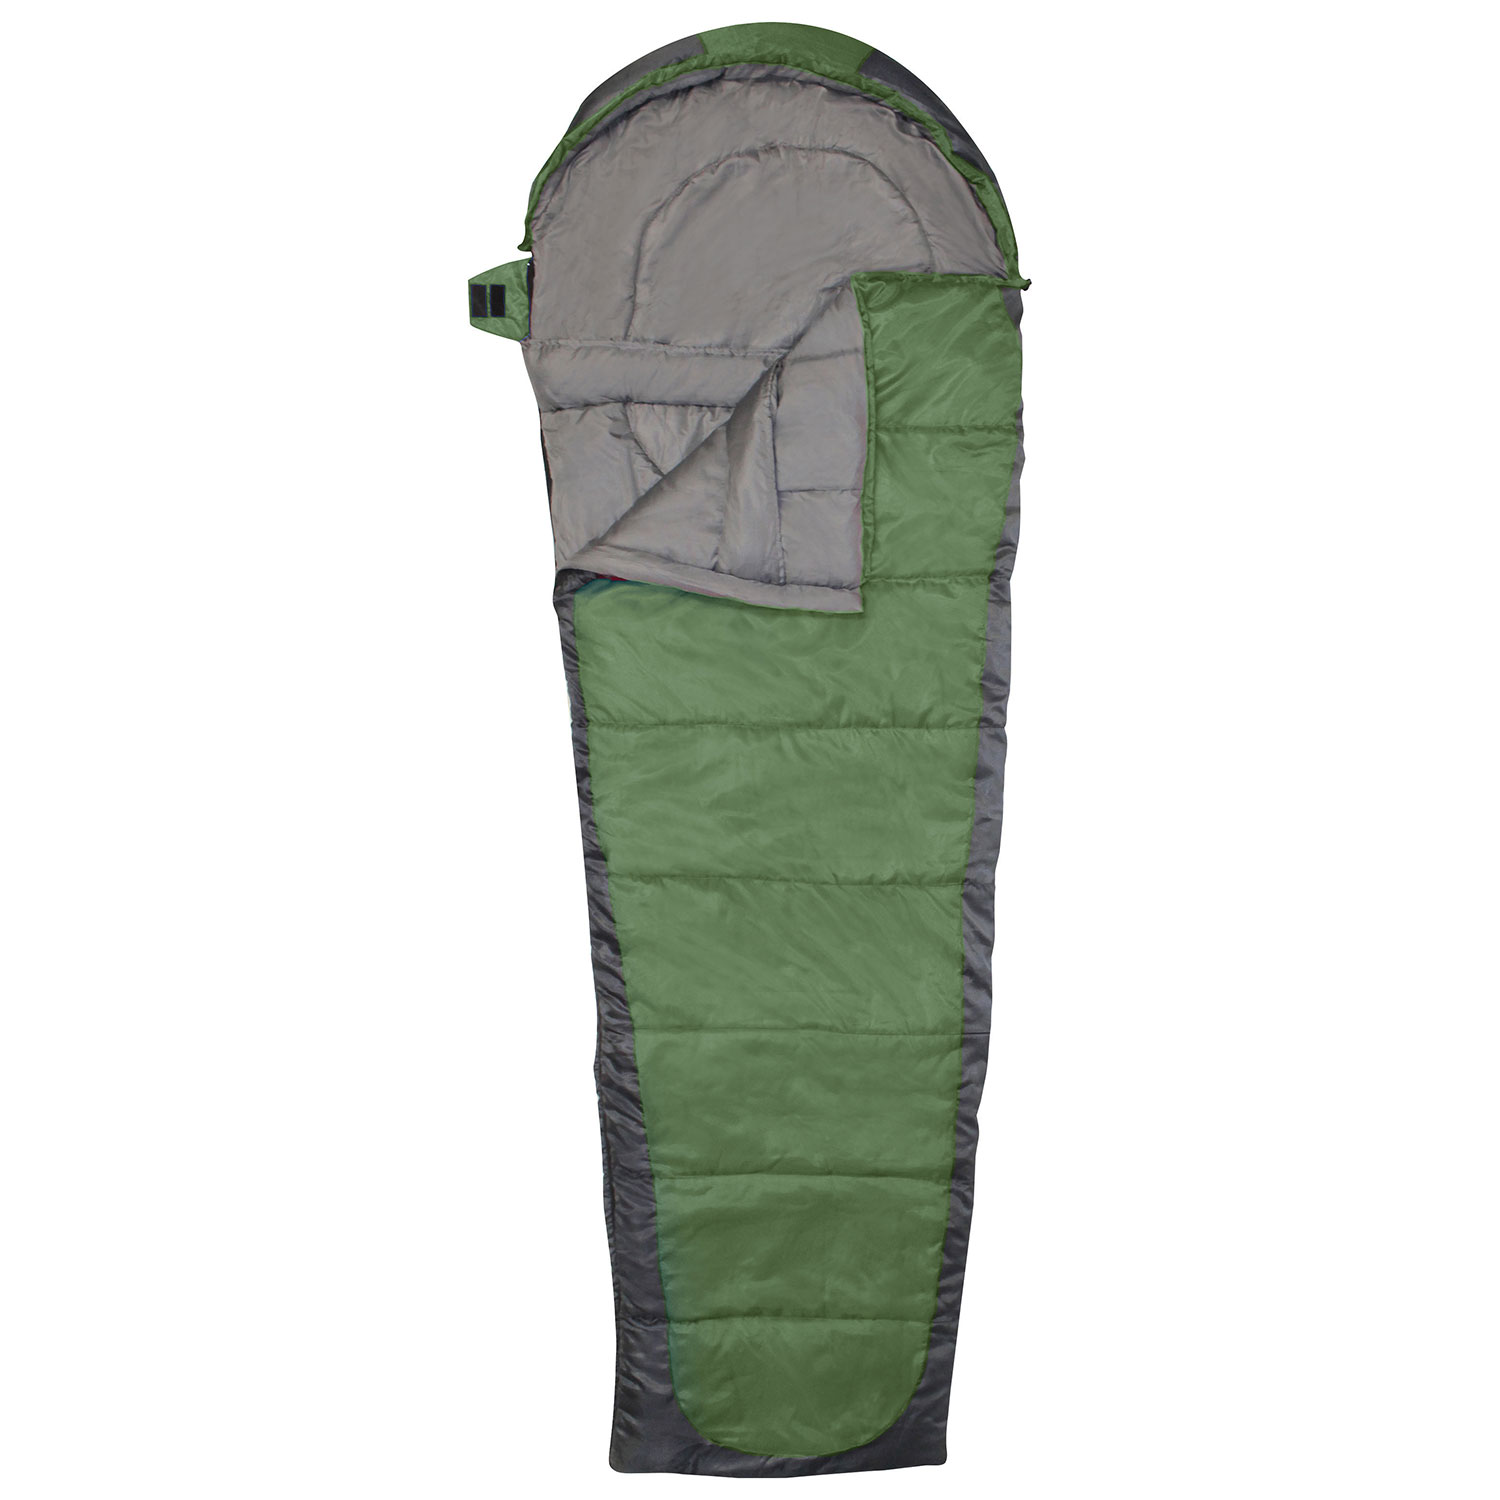 Rockwater Designs Semi-Rectangular Heat Zone Sleeping Bag (-10-Degrees Celcius) - Green/Dark Grey